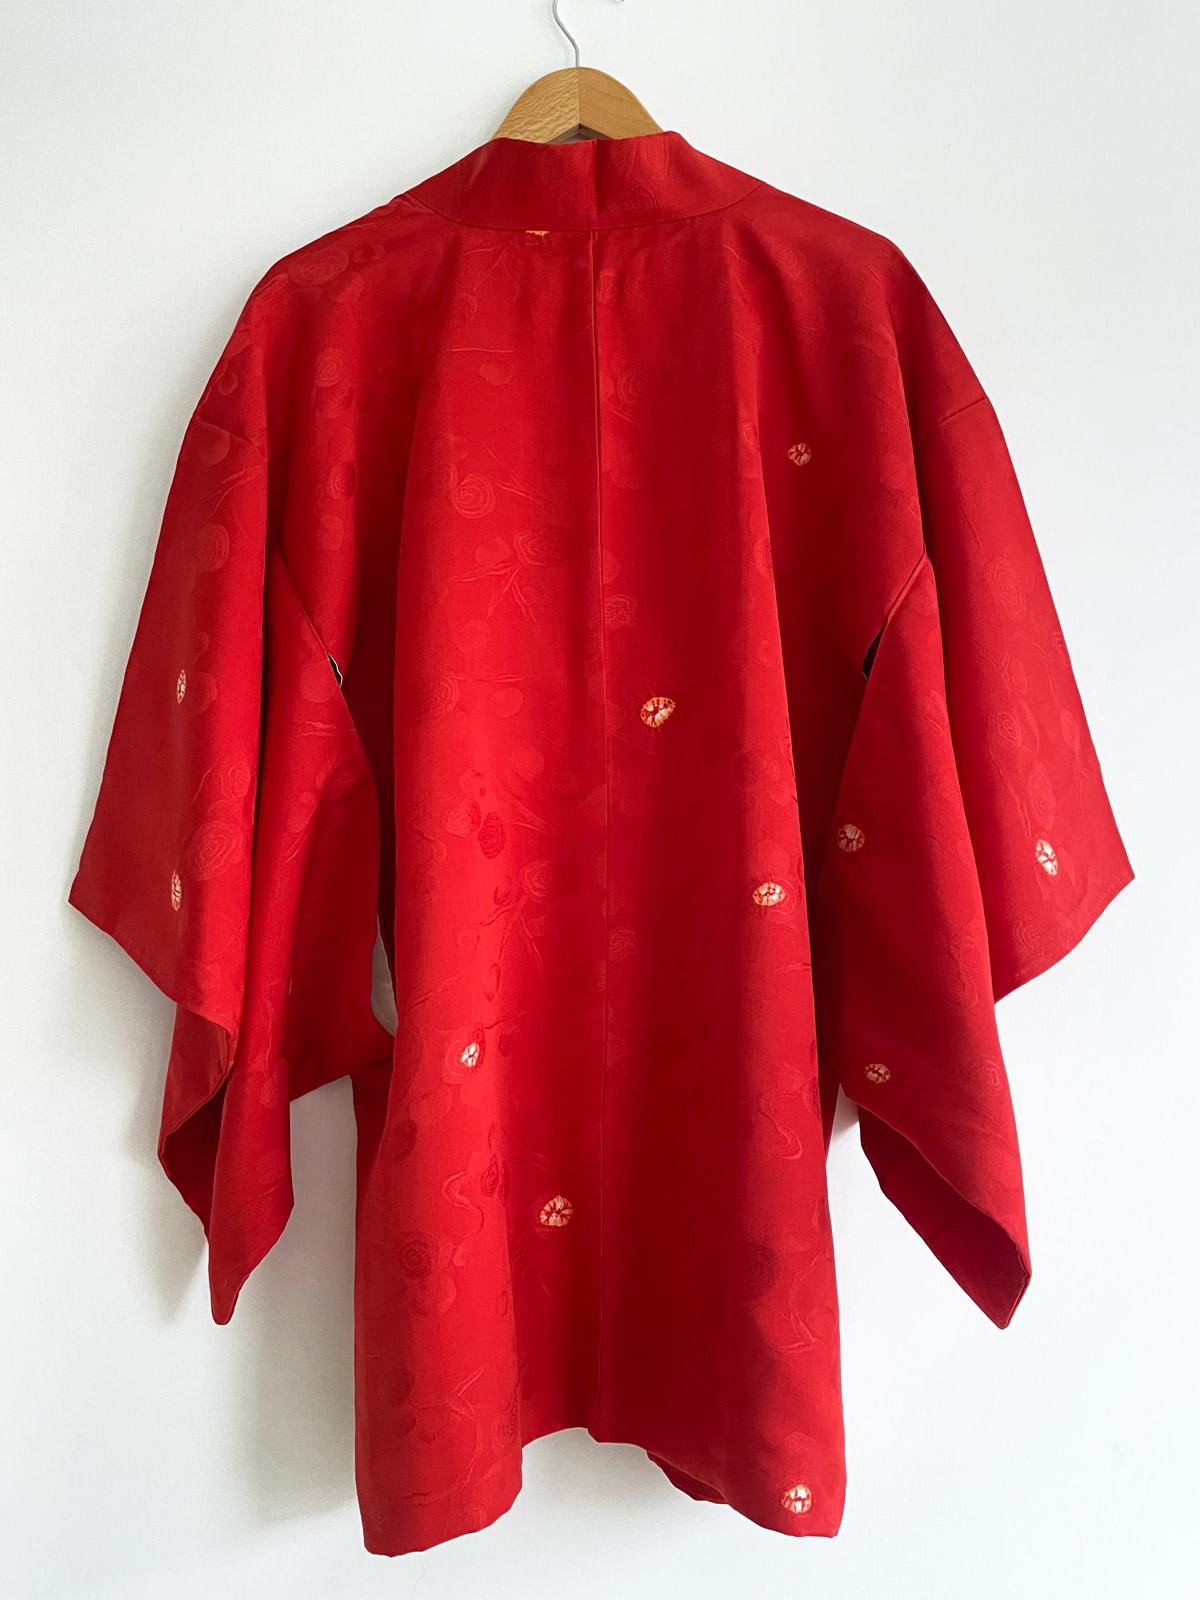 Aka – silk Kimono jacket in bright red